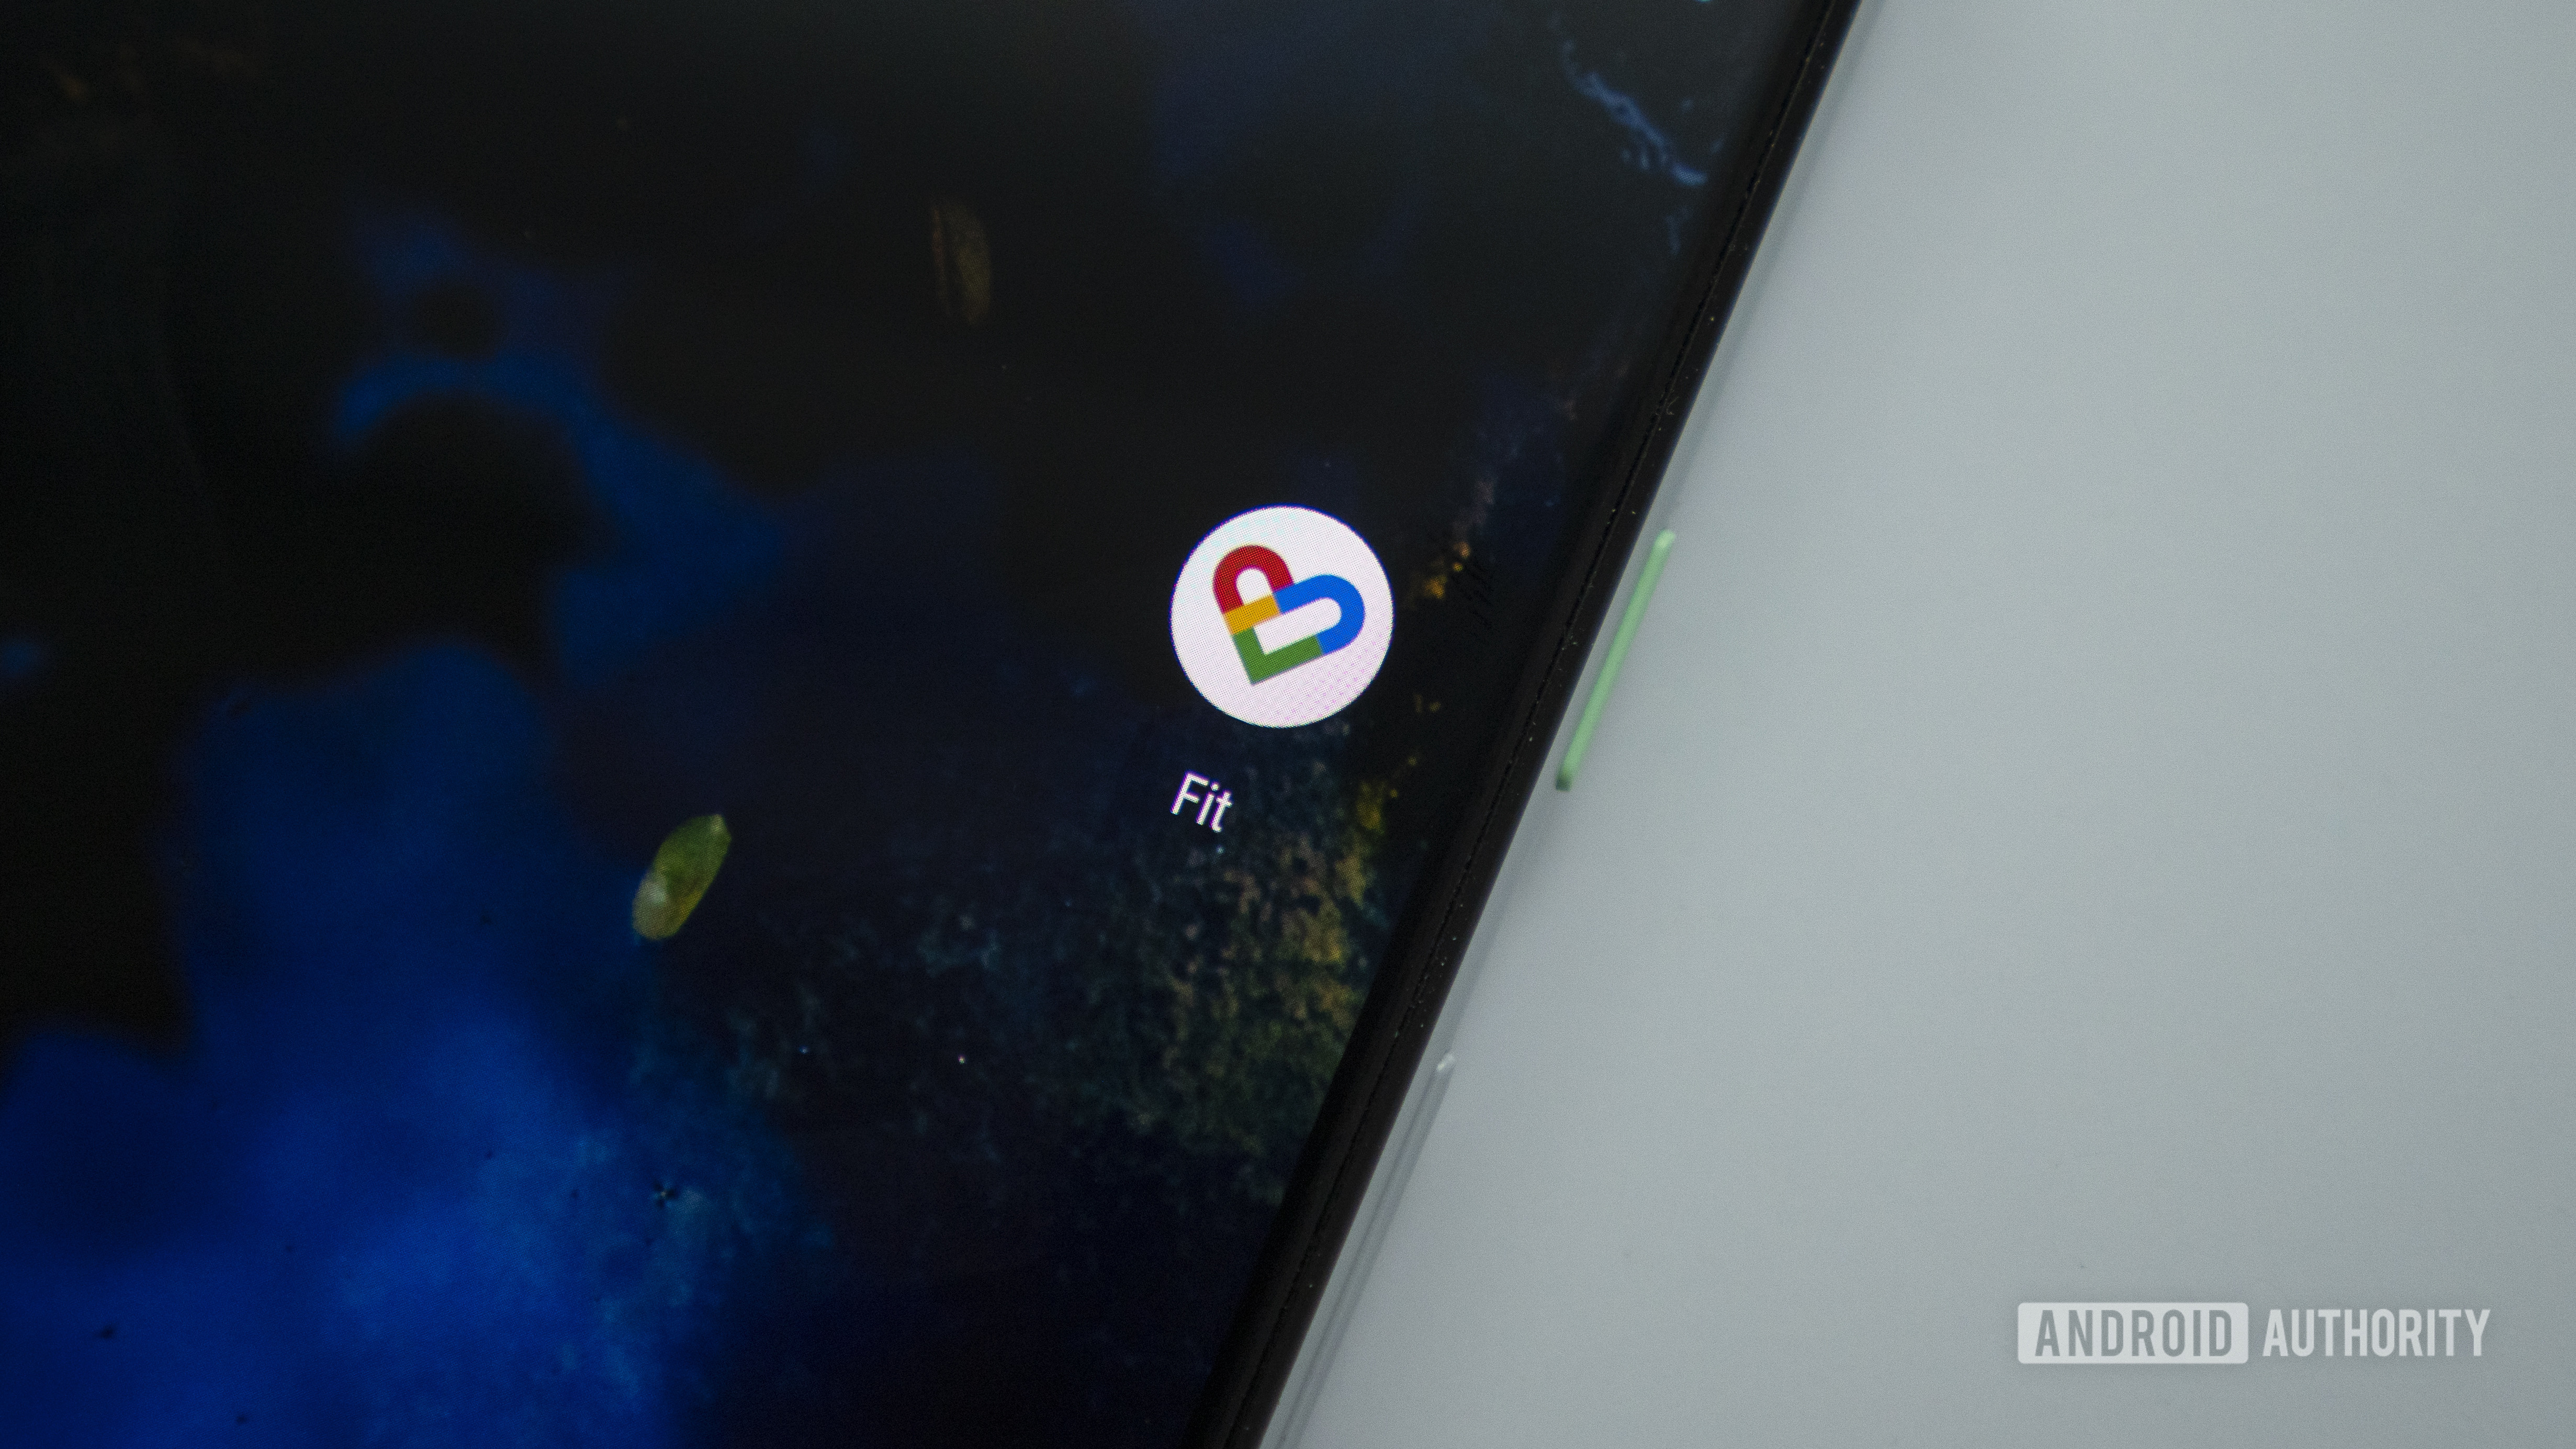 google fit app icon on google pixel 3